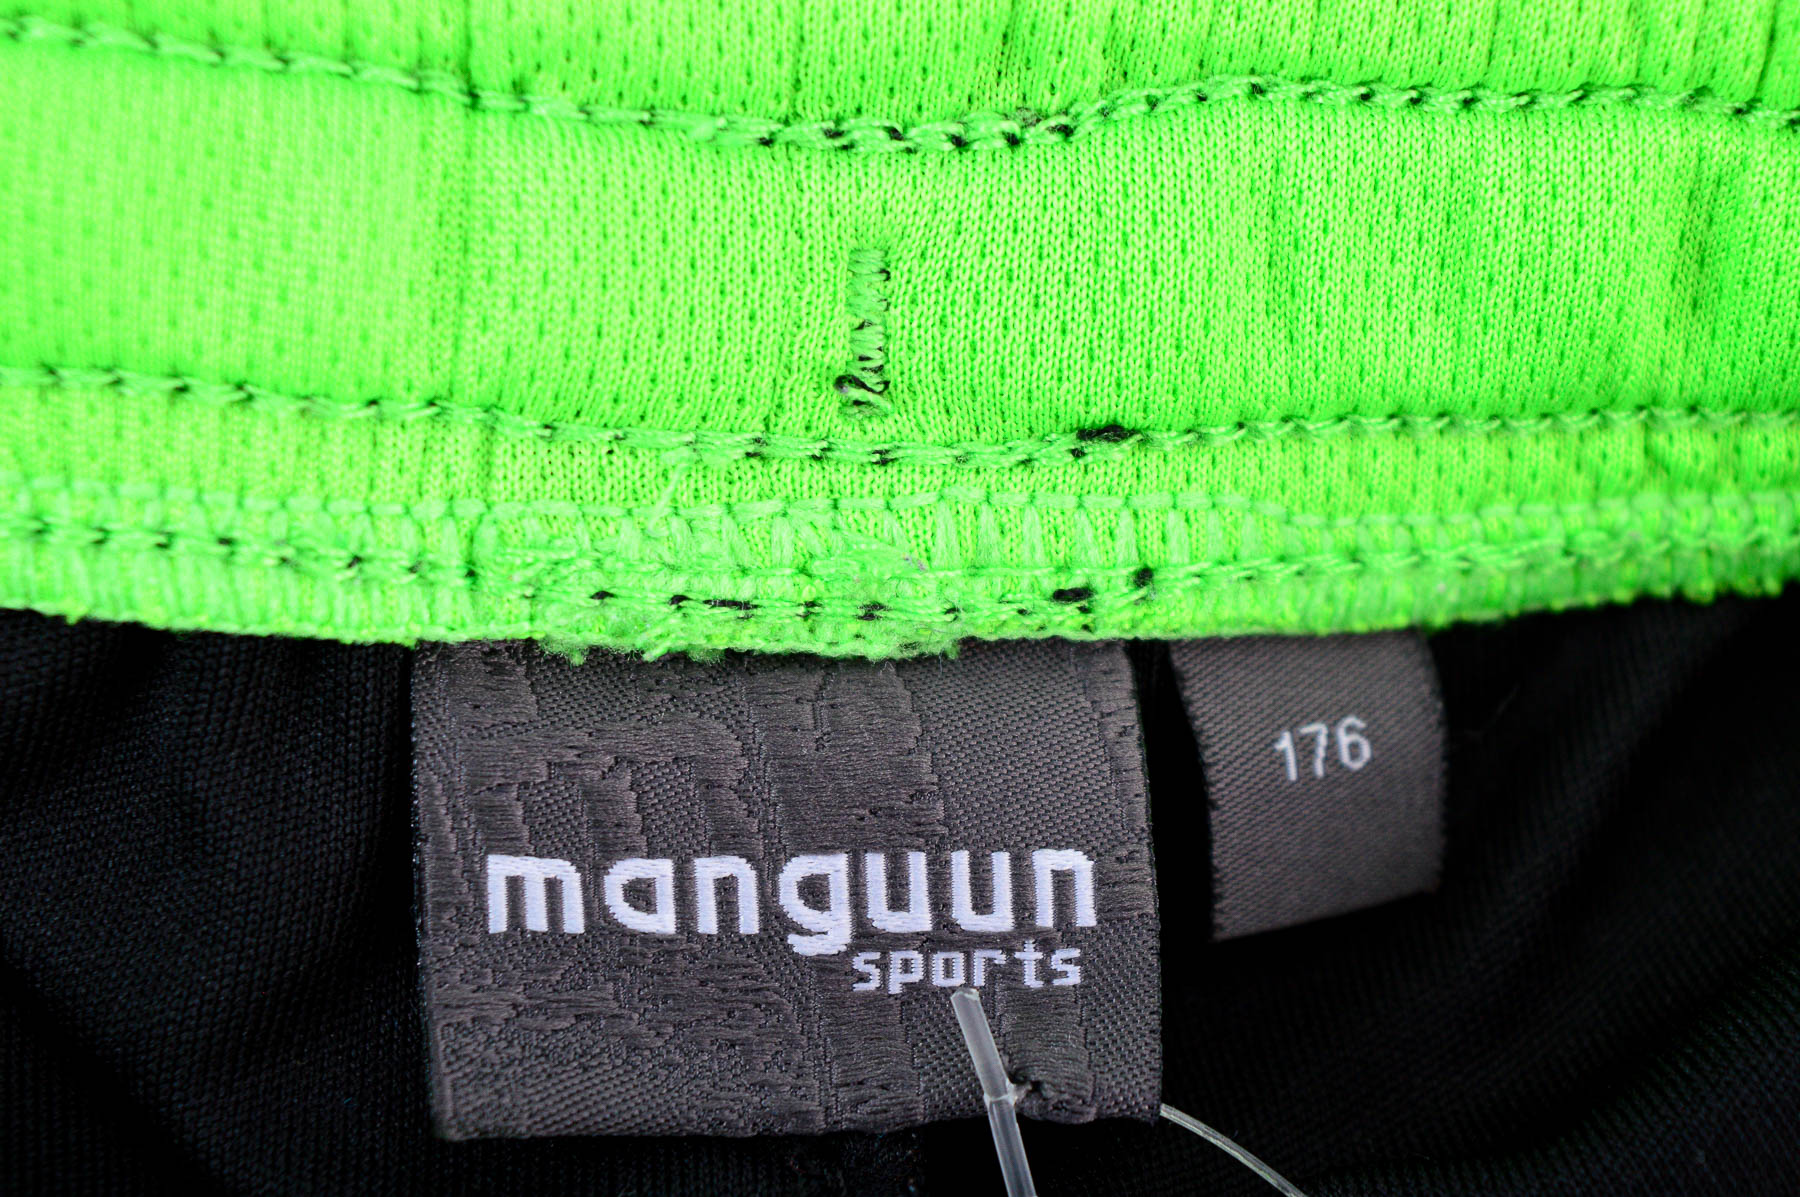 Shorts for boys - Manguun sports - 2